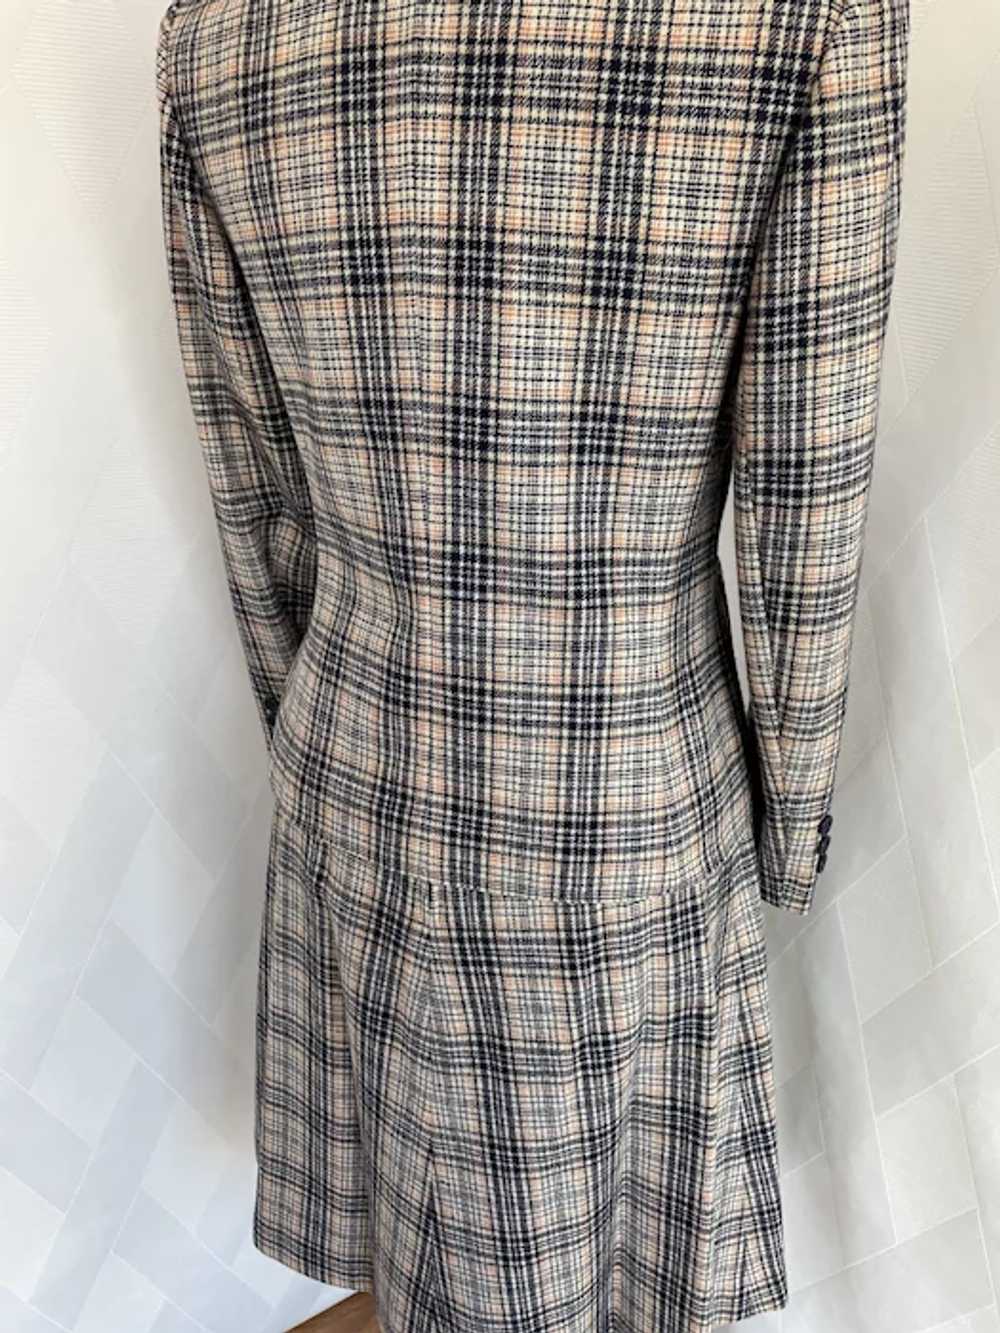 1960s Pendleton Wool Plaid Suit, Jacket and Skirt - image 3